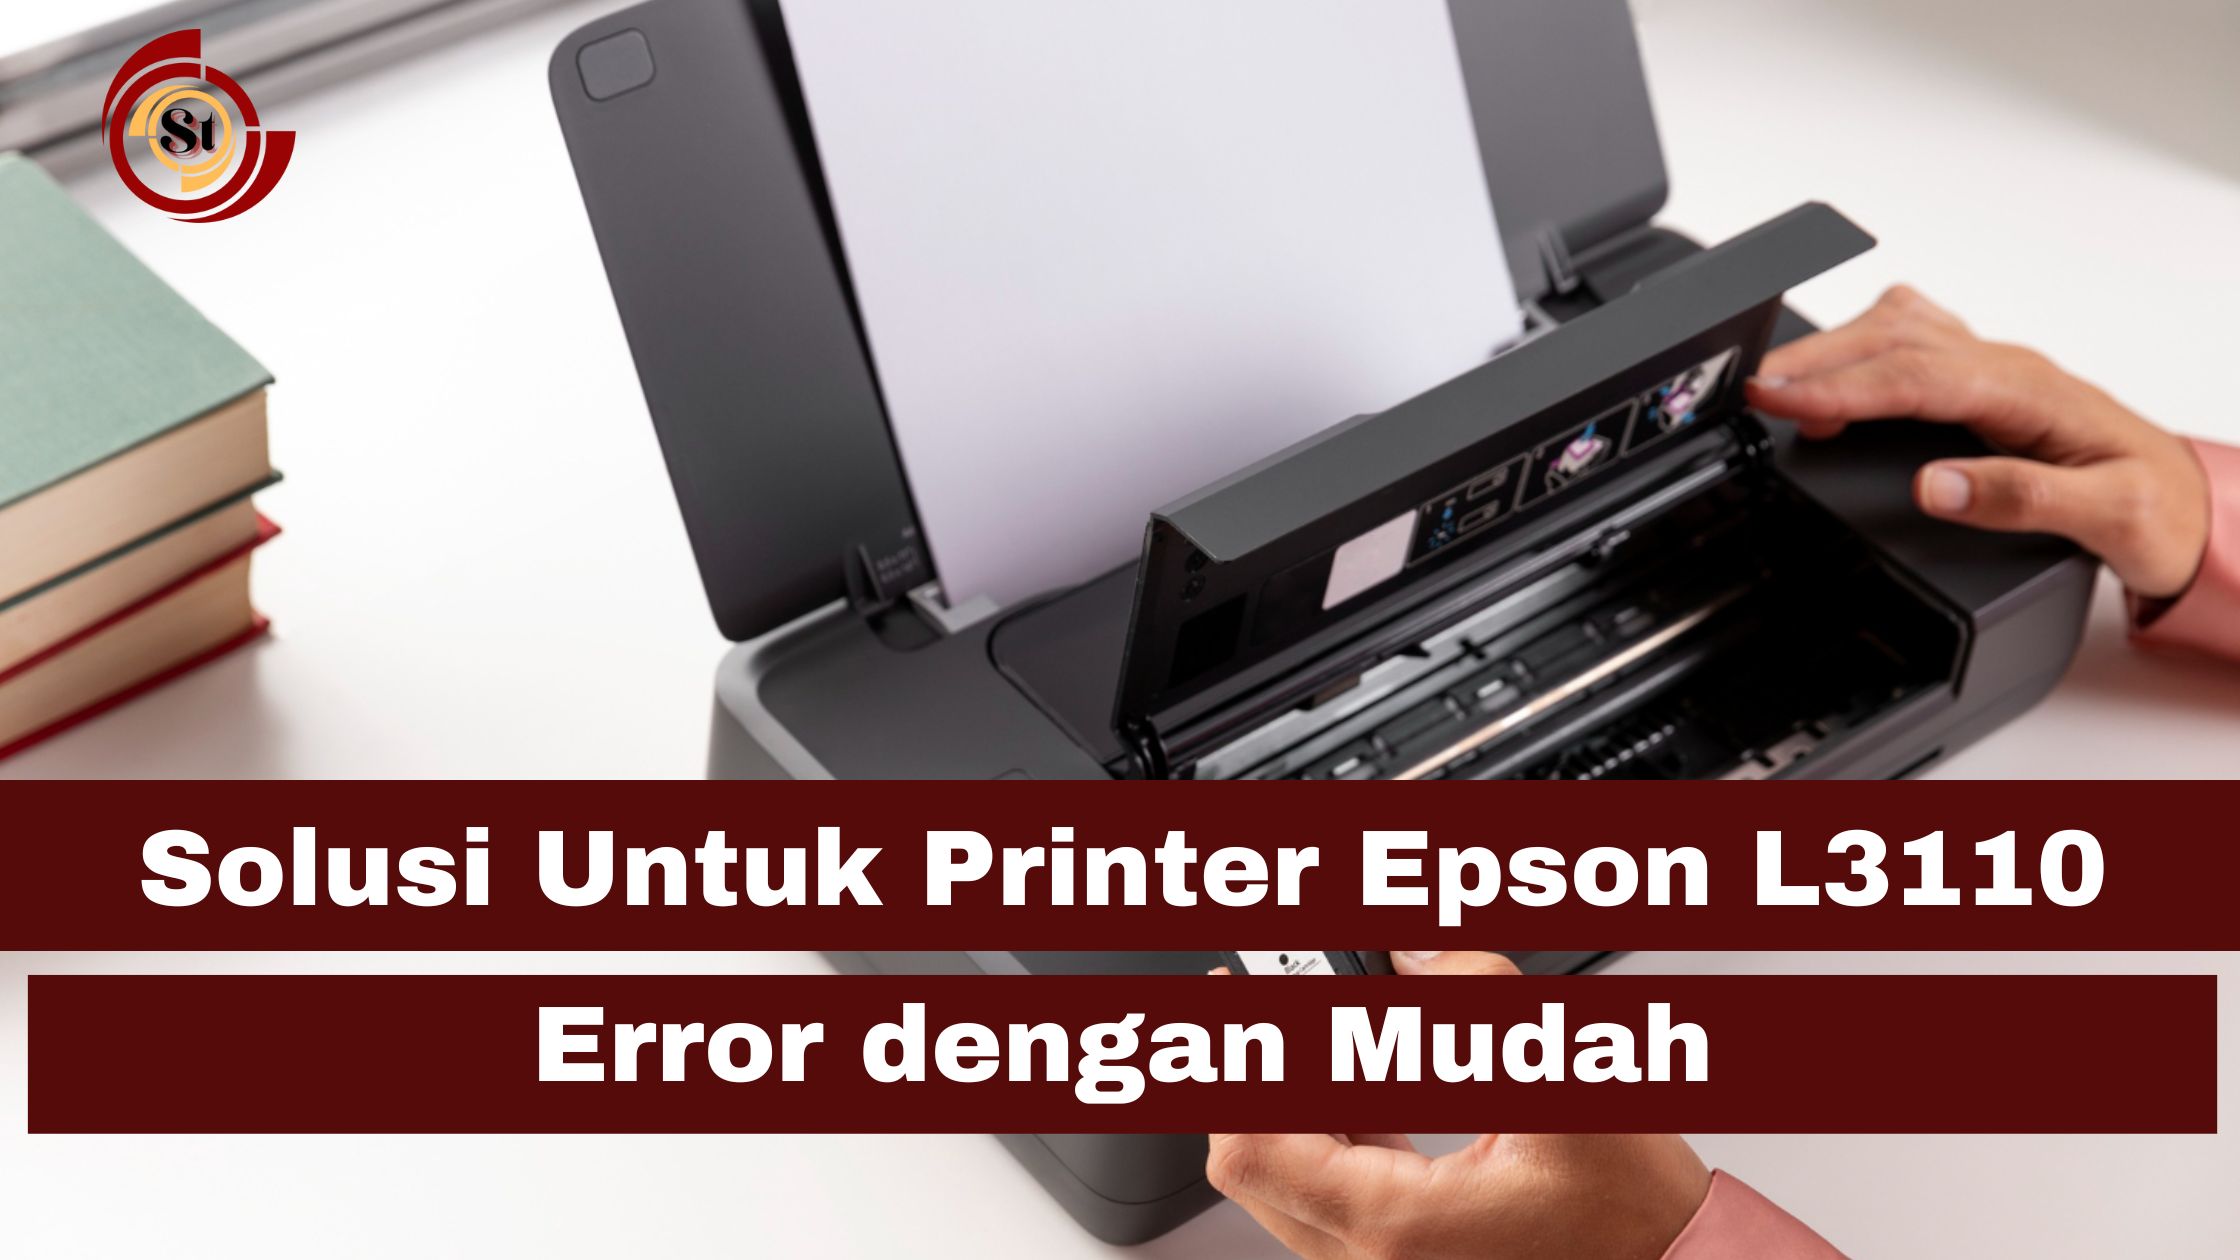 Solusi Untuk Printer Epson L3110 Error